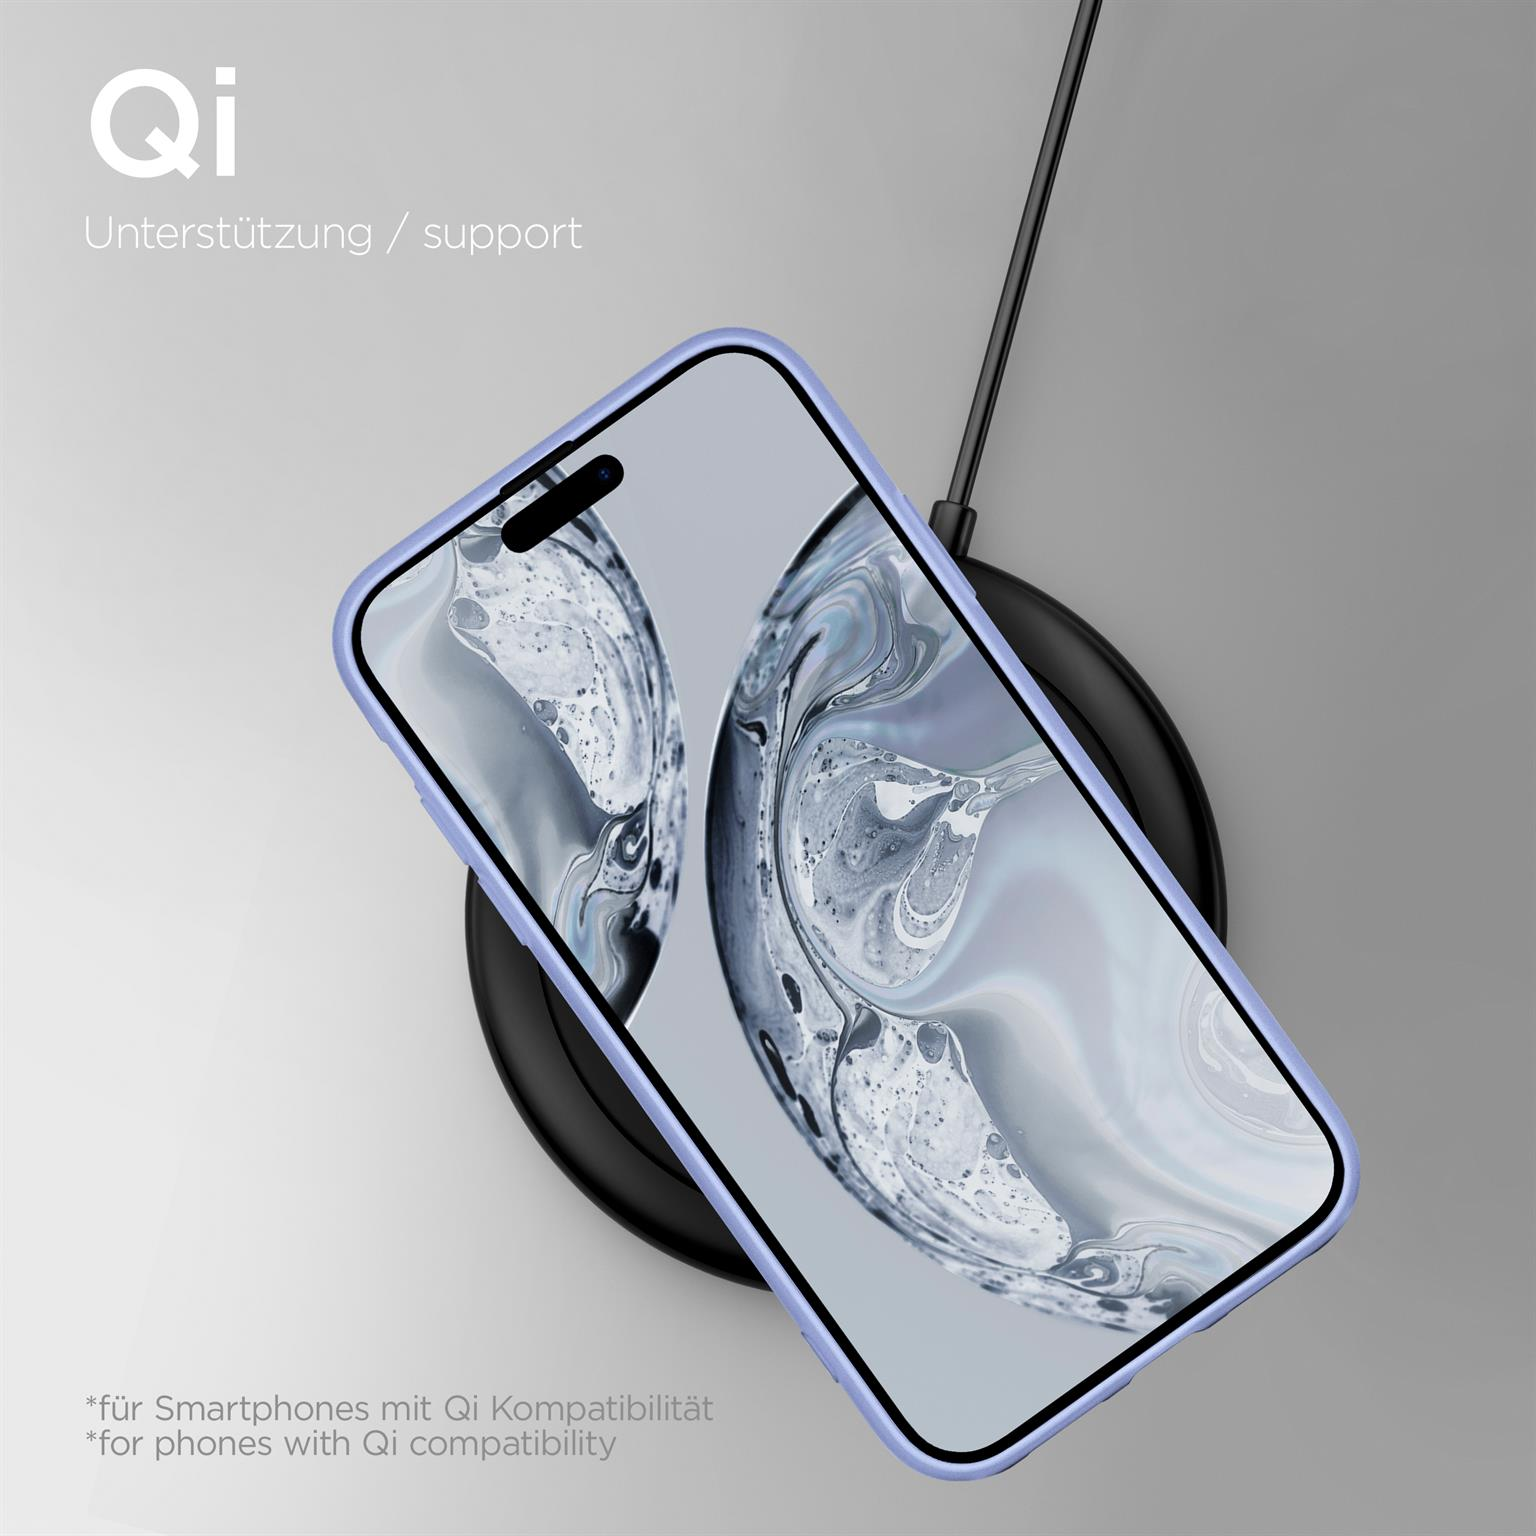 Apple, Backcover, Soft Max, 14 Himmelblau iPhone Case, ONEFLOW Pro